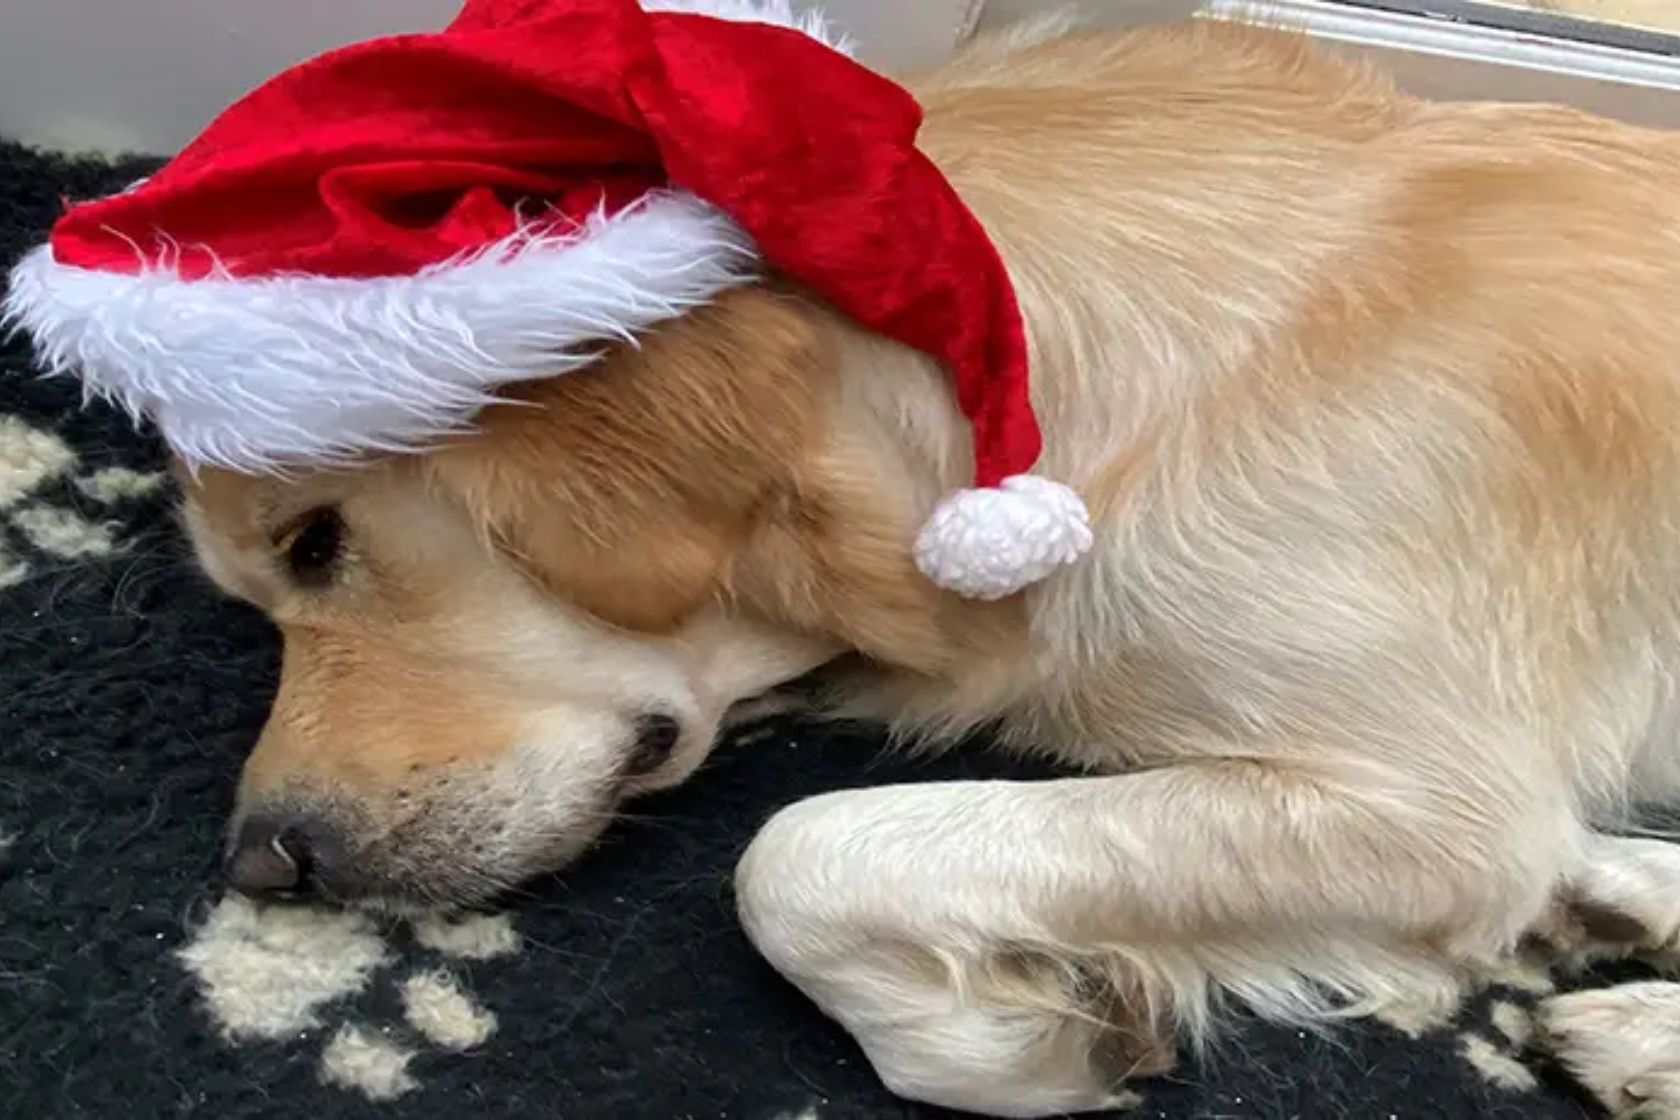 Dog wearing Christmas hat